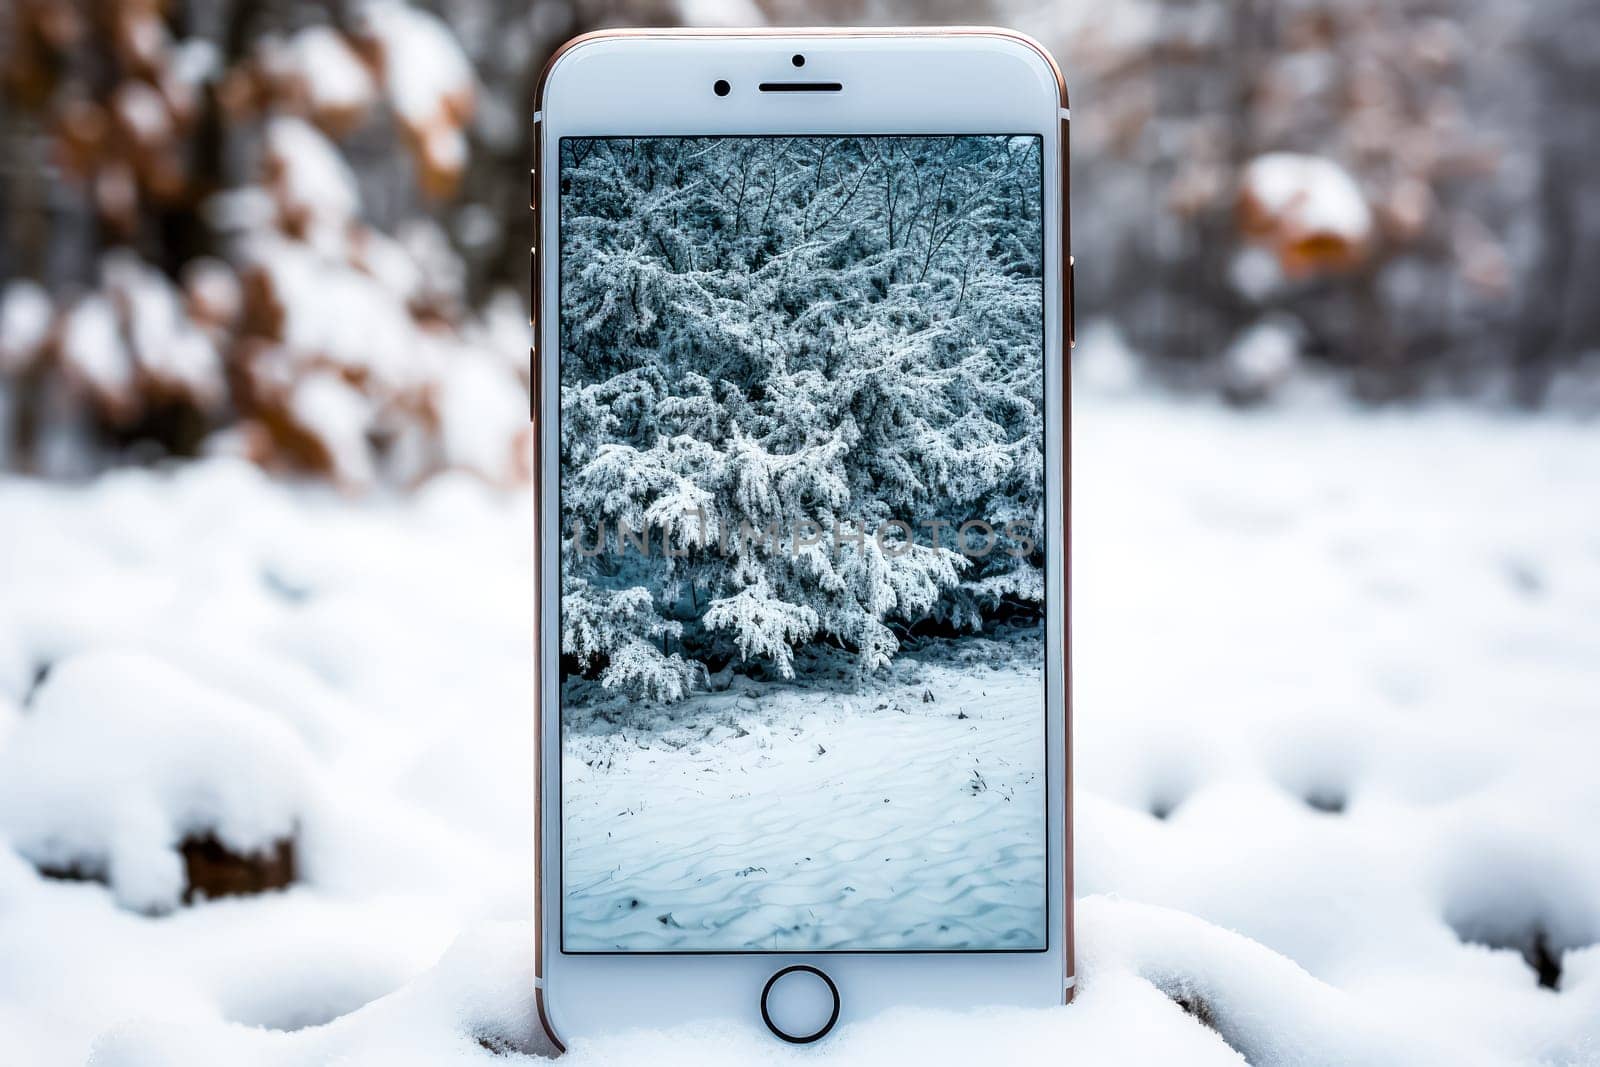 A smartphone featuring a beautiful screen saver by Alla_Morozova93